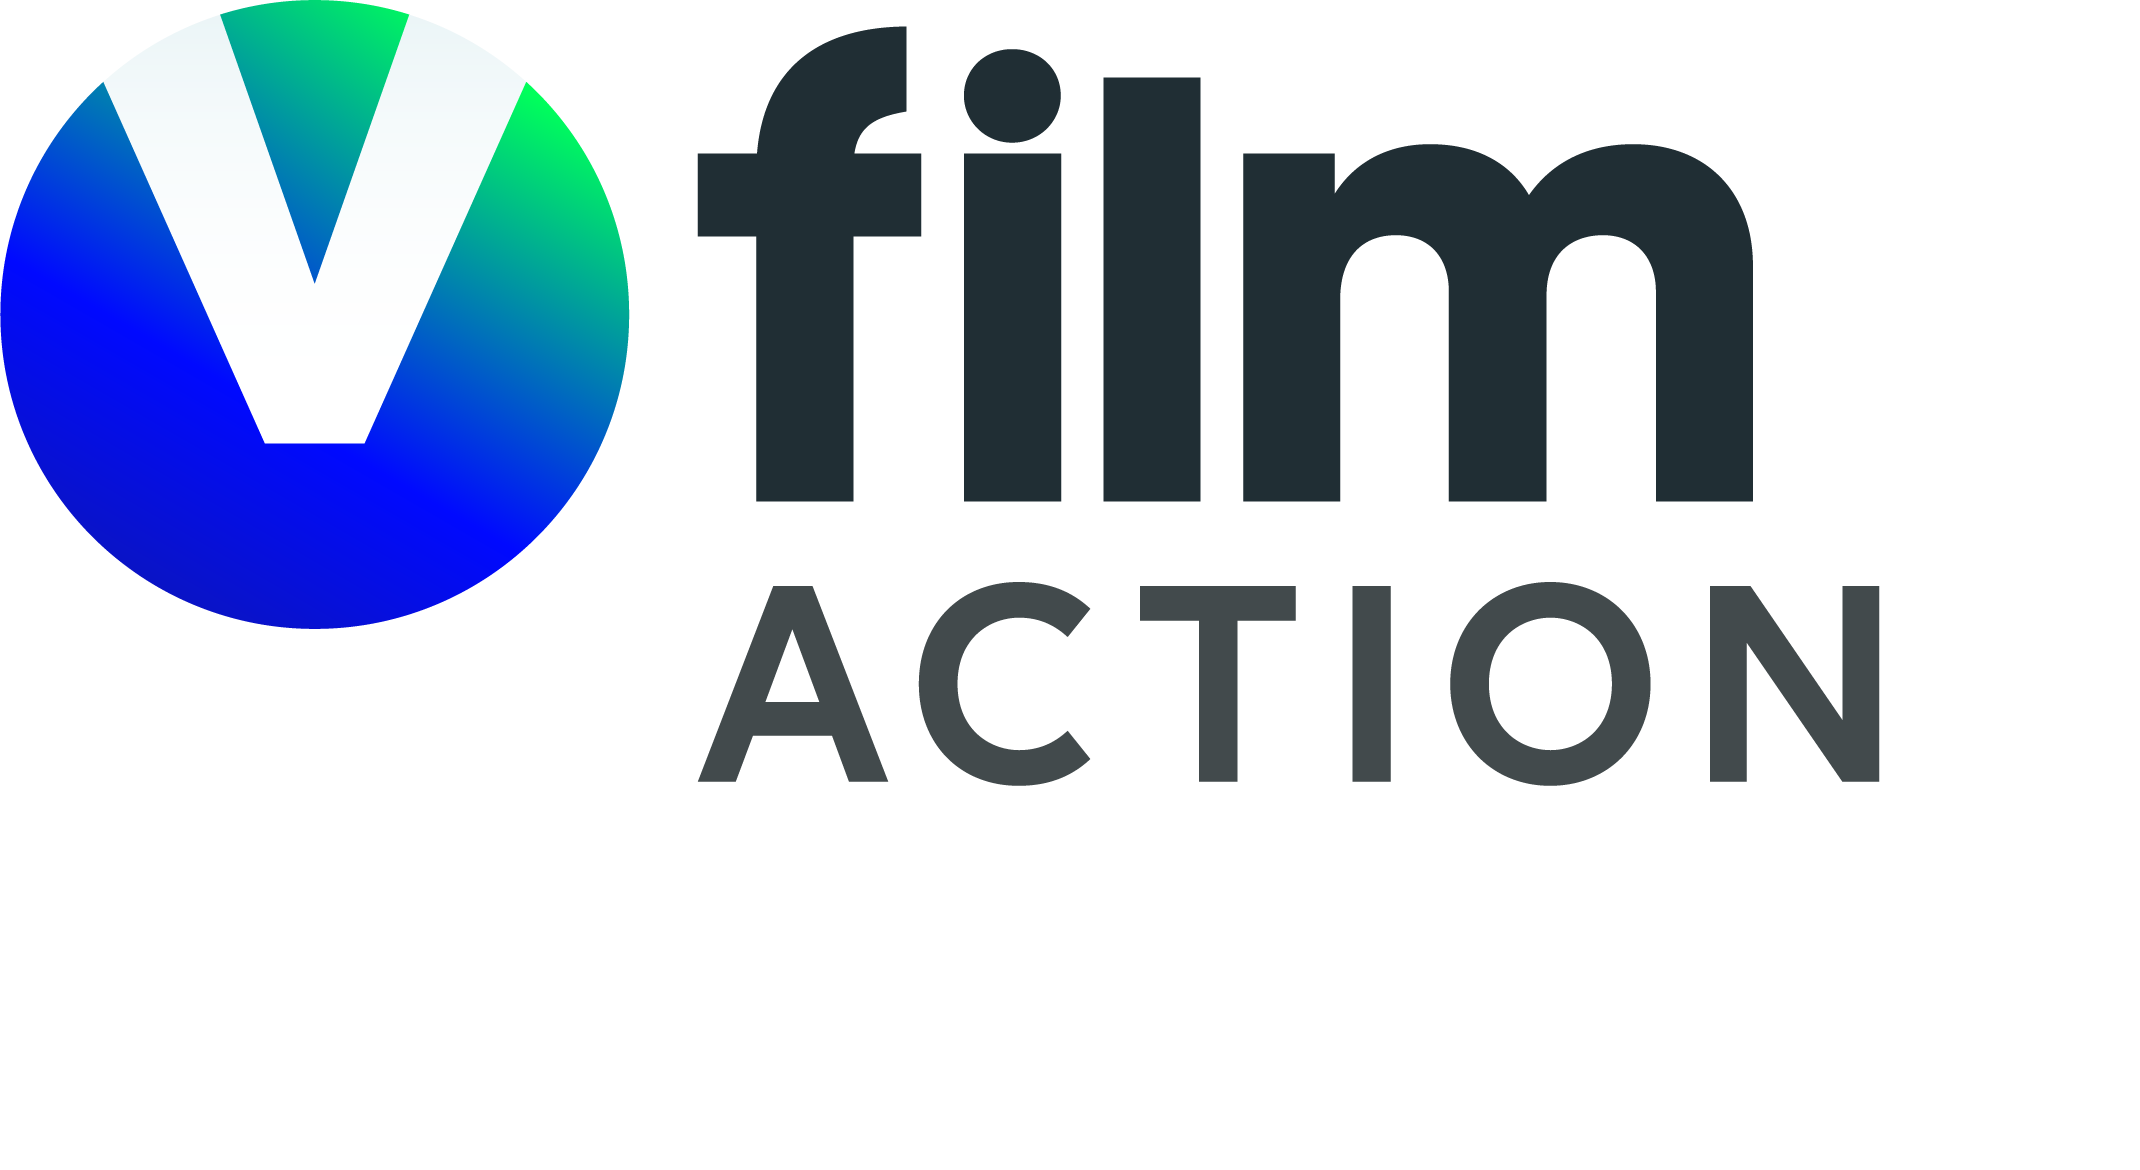 Viasat Film Action Norway